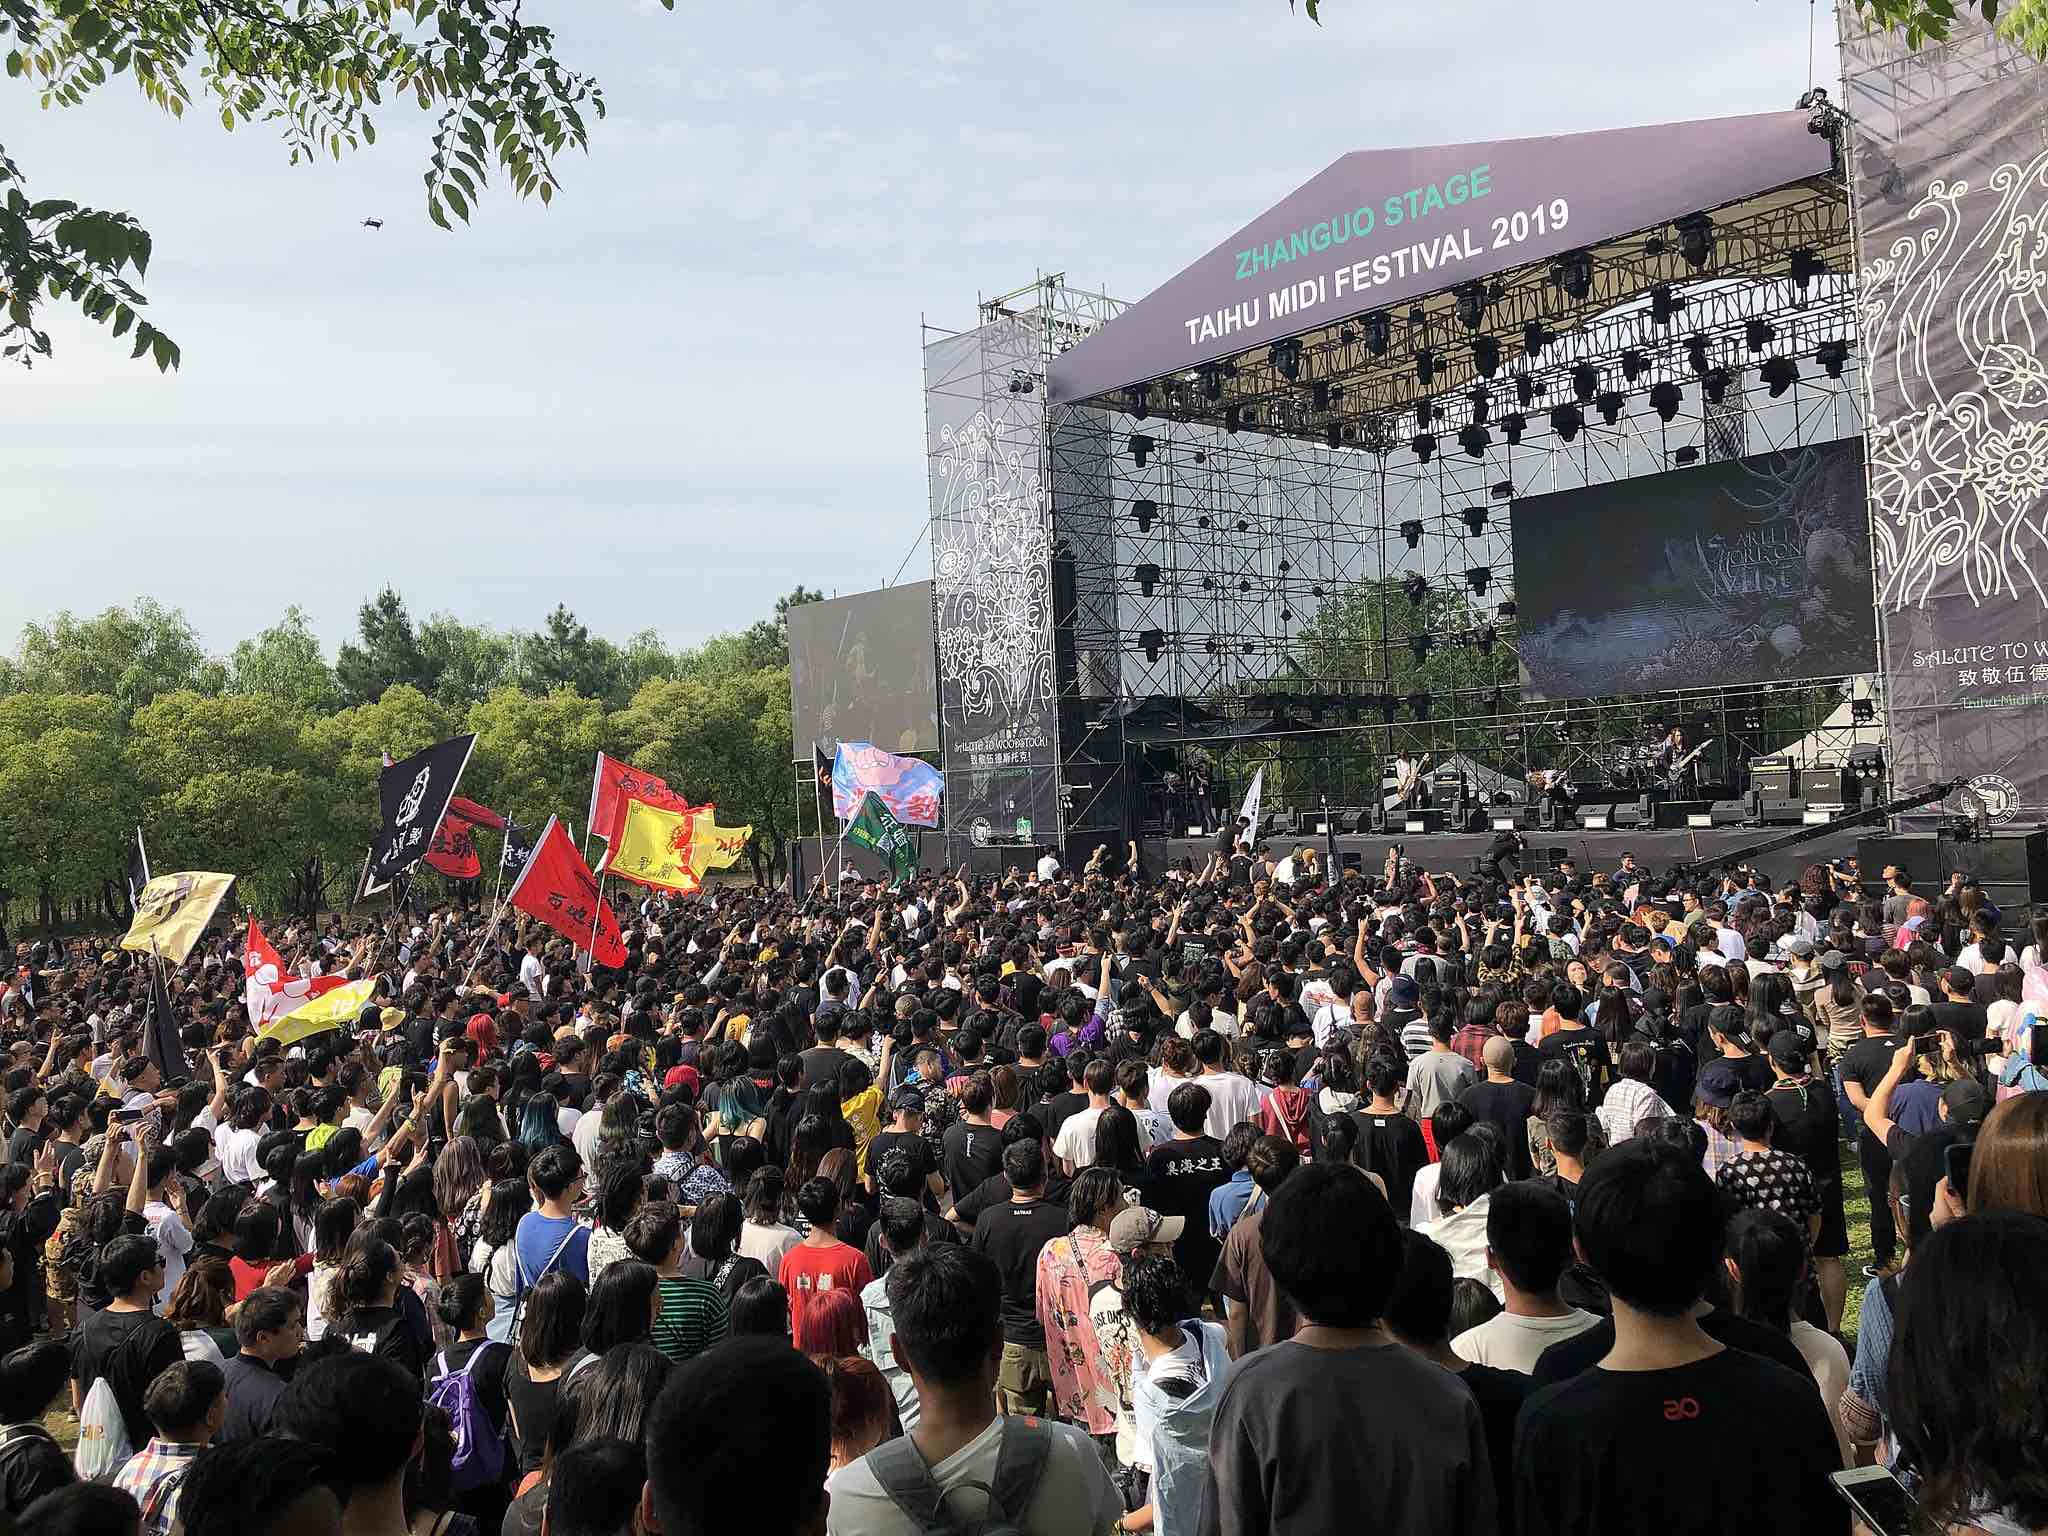 2048px-Zhanguo_Stage_in_Taihu_MIDI_Festival_0158.jpeg